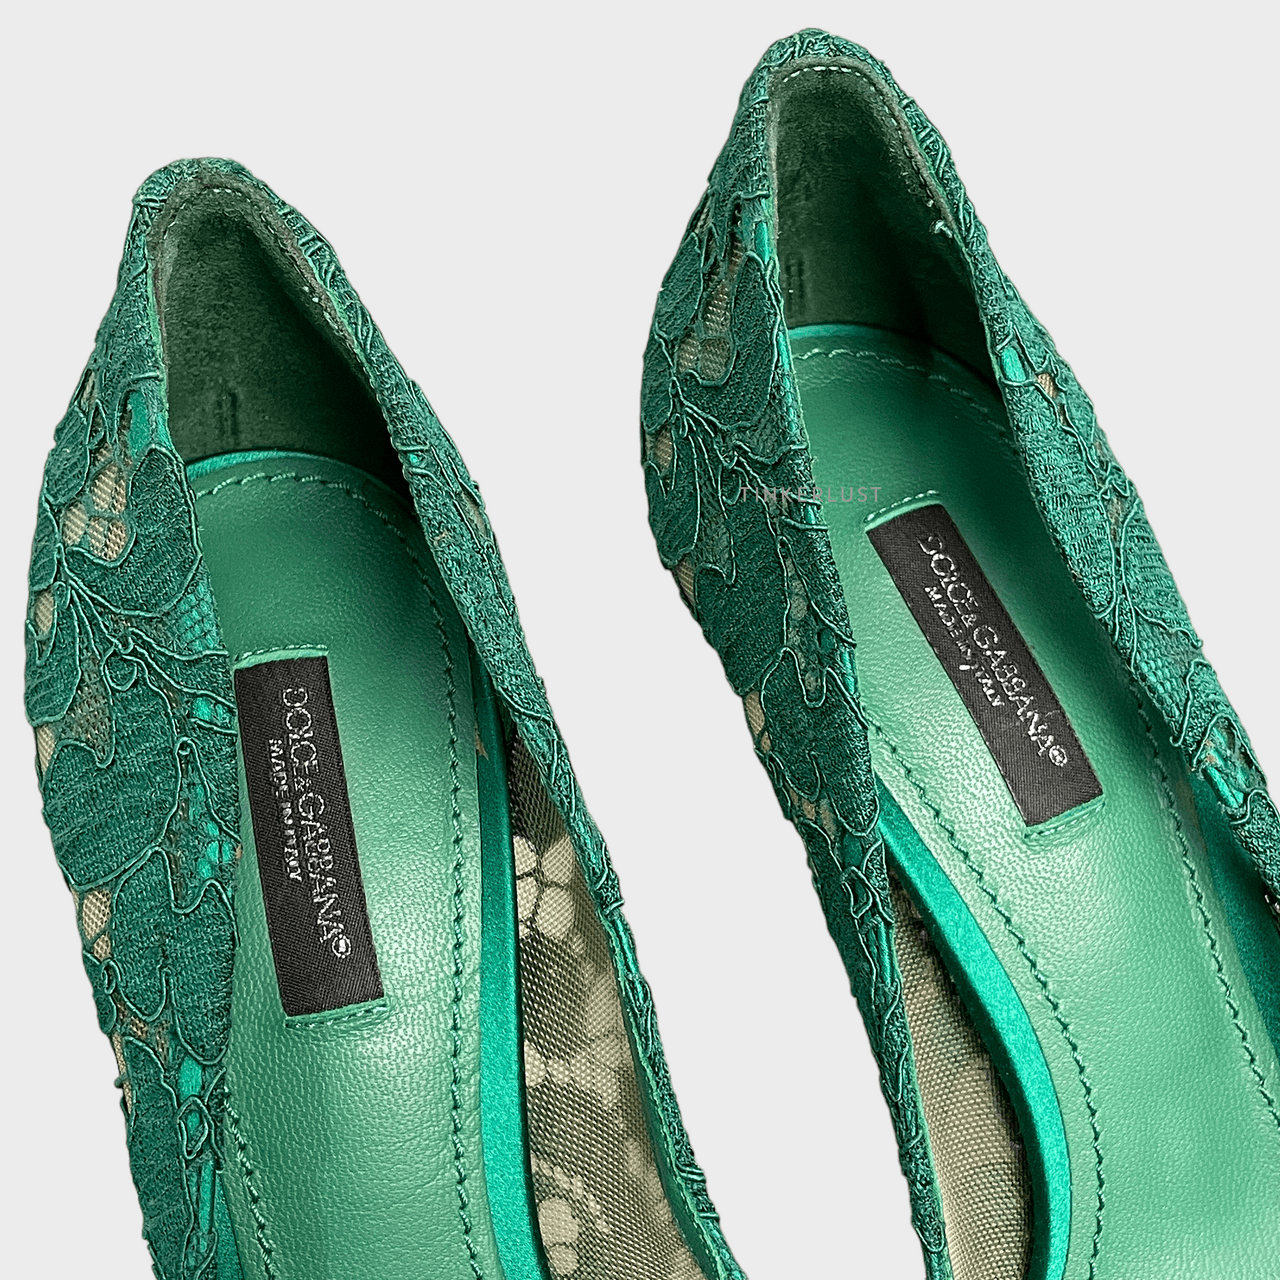 Dolce & Gabbana Embellished Bellucci Lace Green Pumps Heels